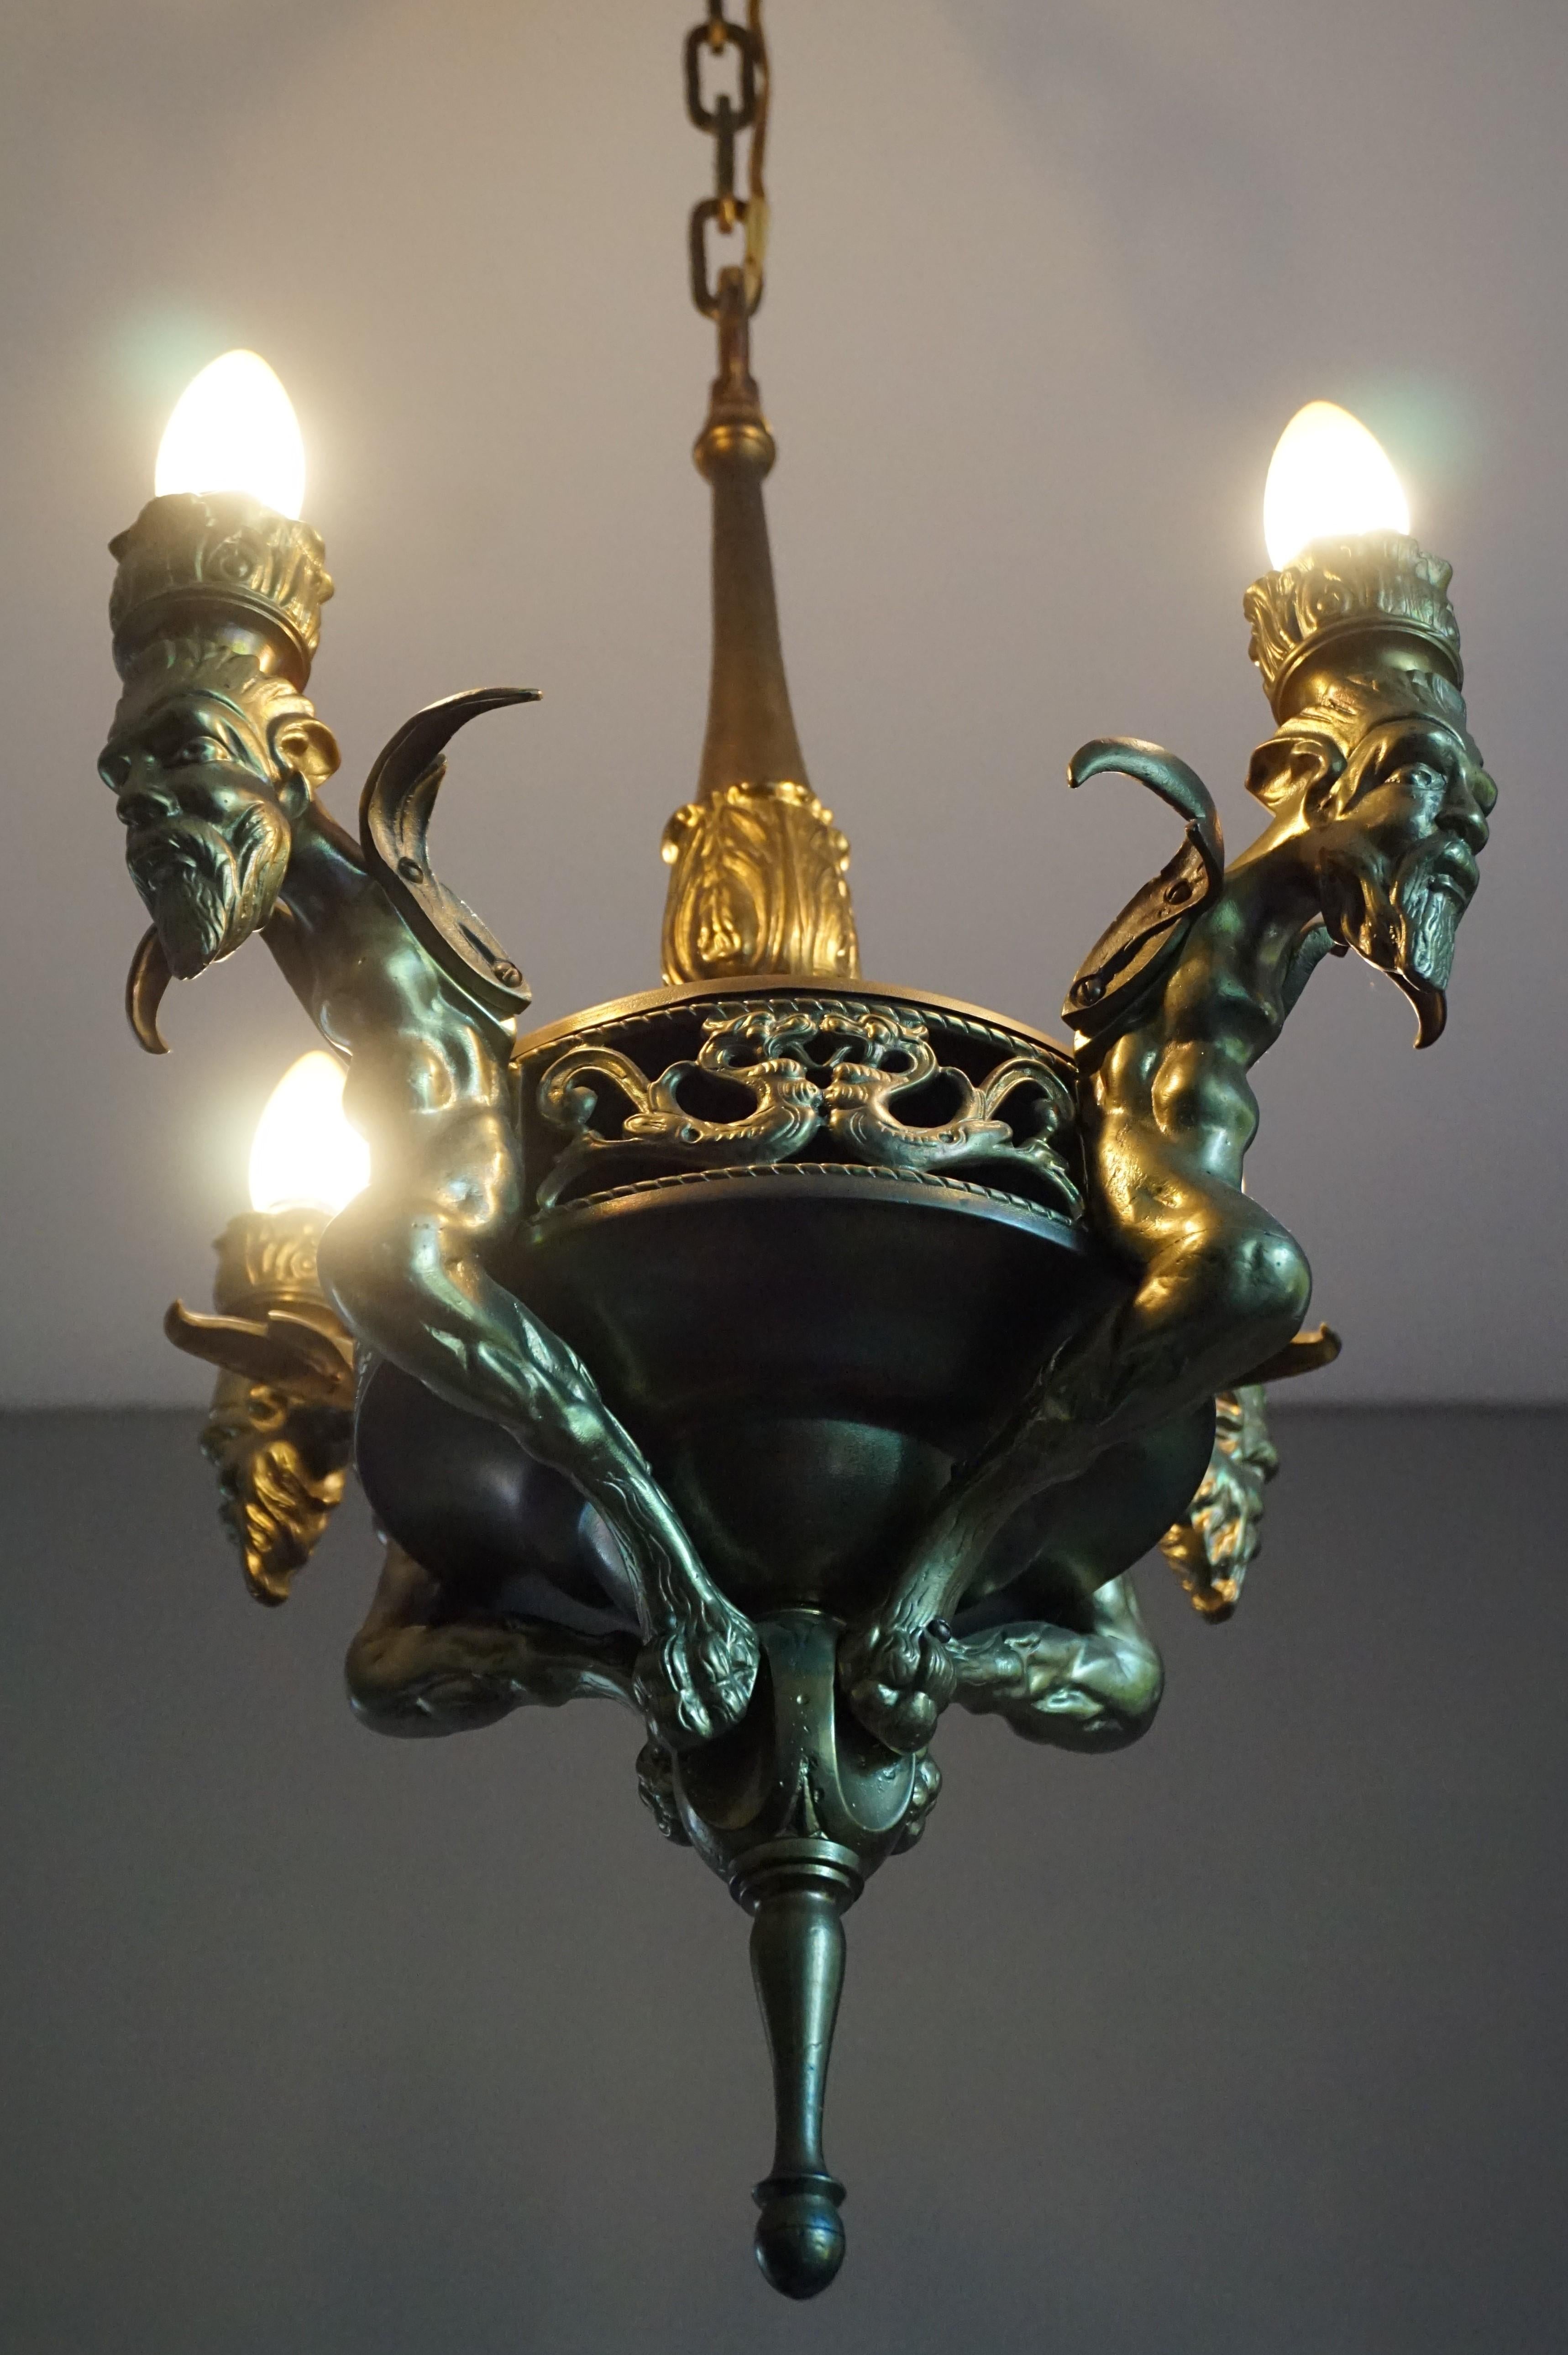 Antique Gilt Bronze & Brass Gothic Revival Pendant Light with Chimera Sculptures 1